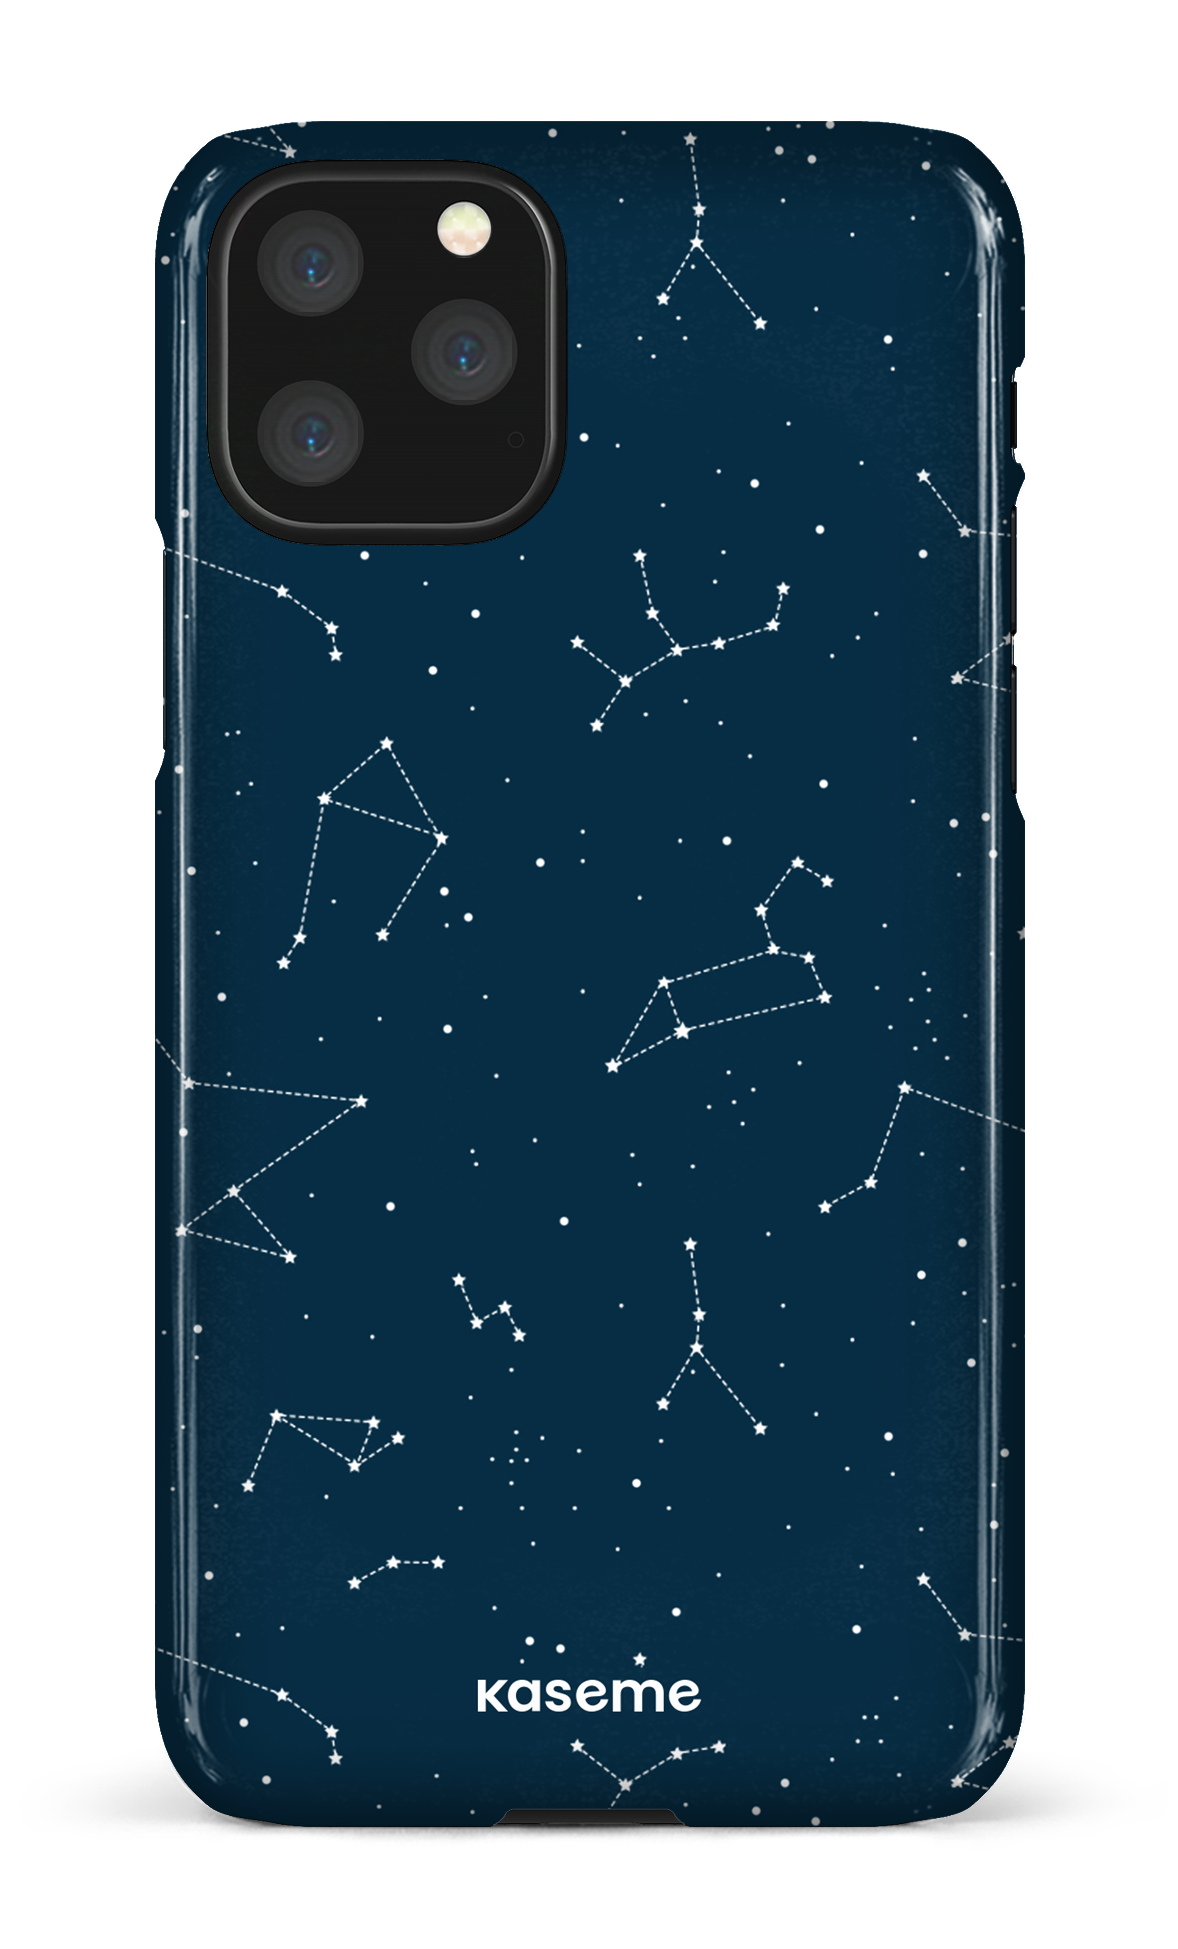 Cosmos - iPhone 11 Pro